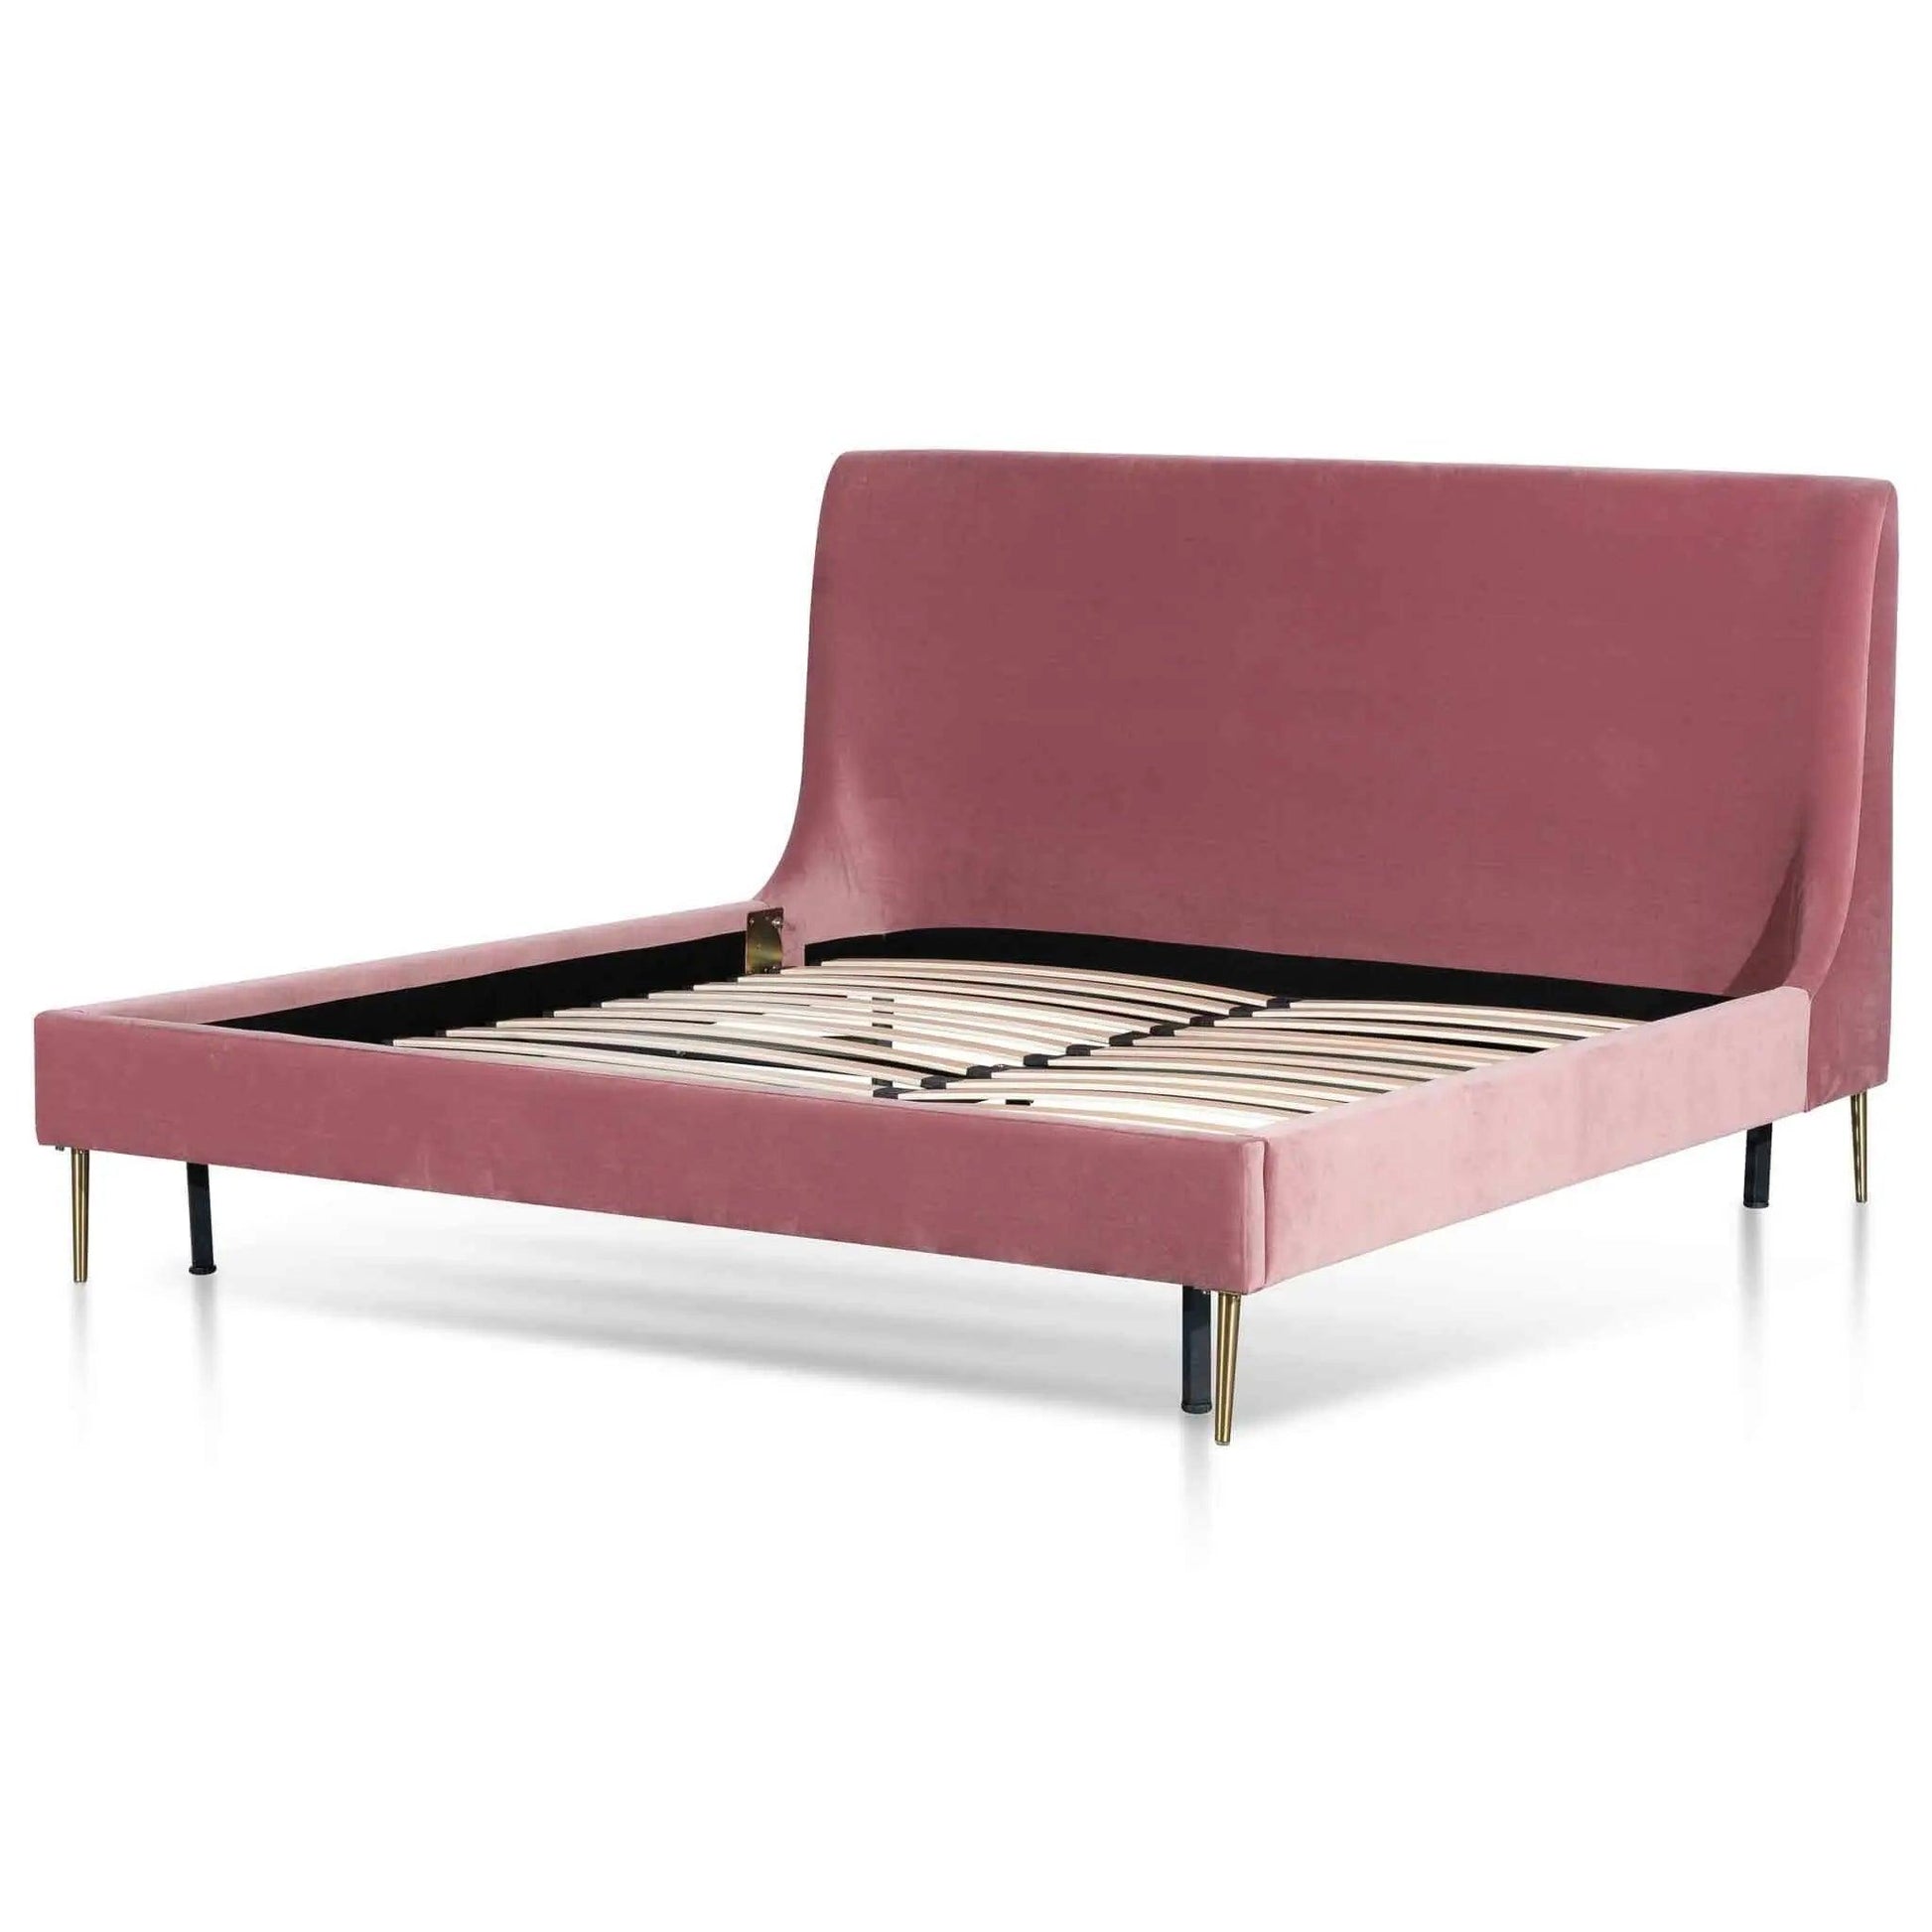 Calibre King Bed Frame - Blush Peach Velvet BD6279-MI - BedsBD6279-MI 5